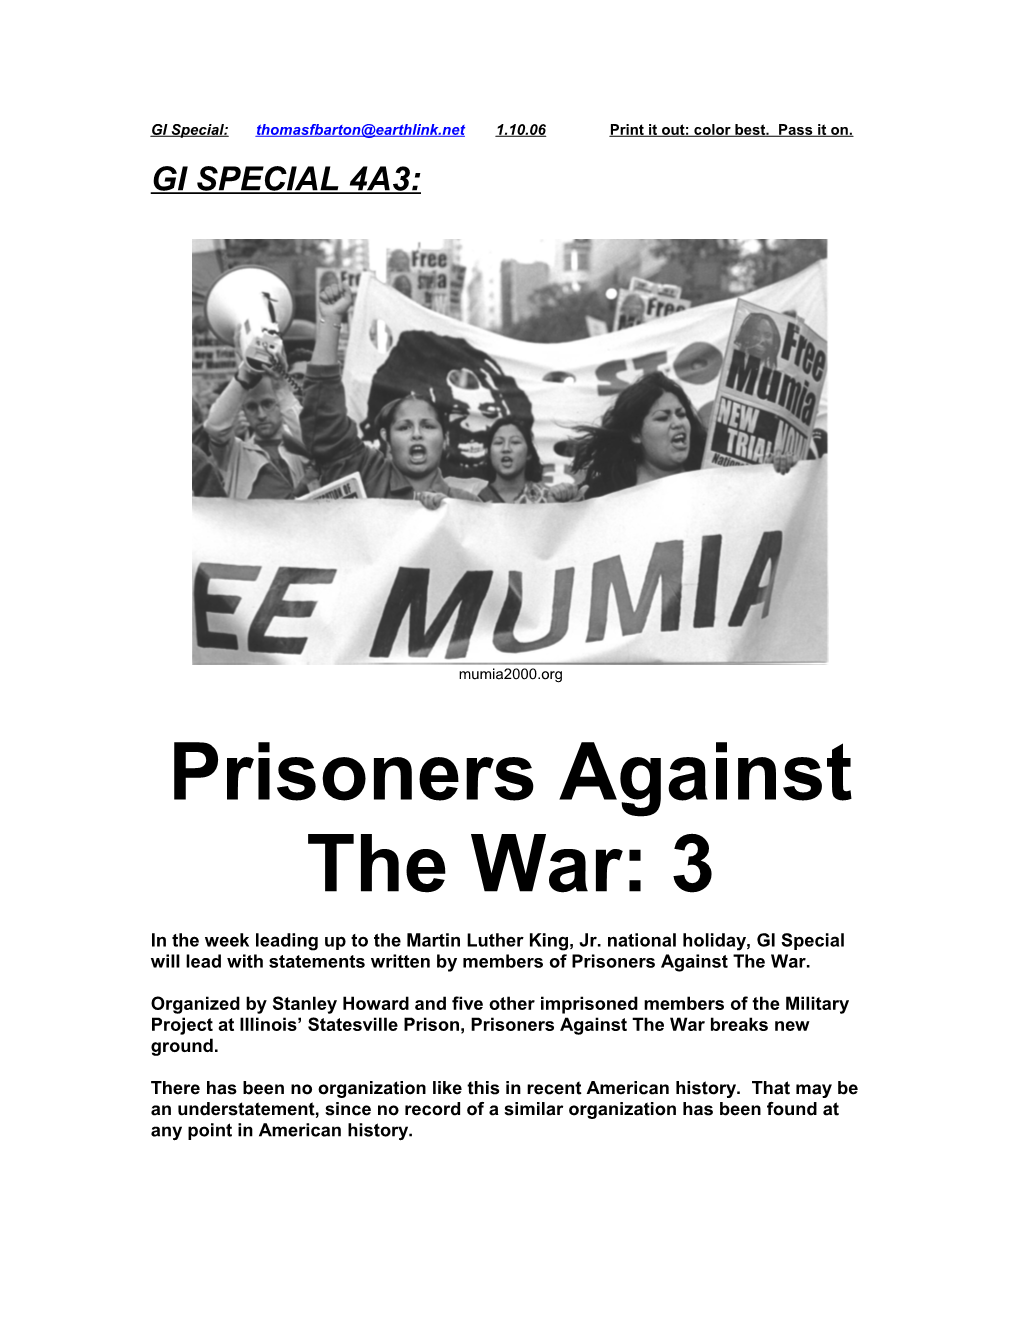 Prisoners Against the War: 3